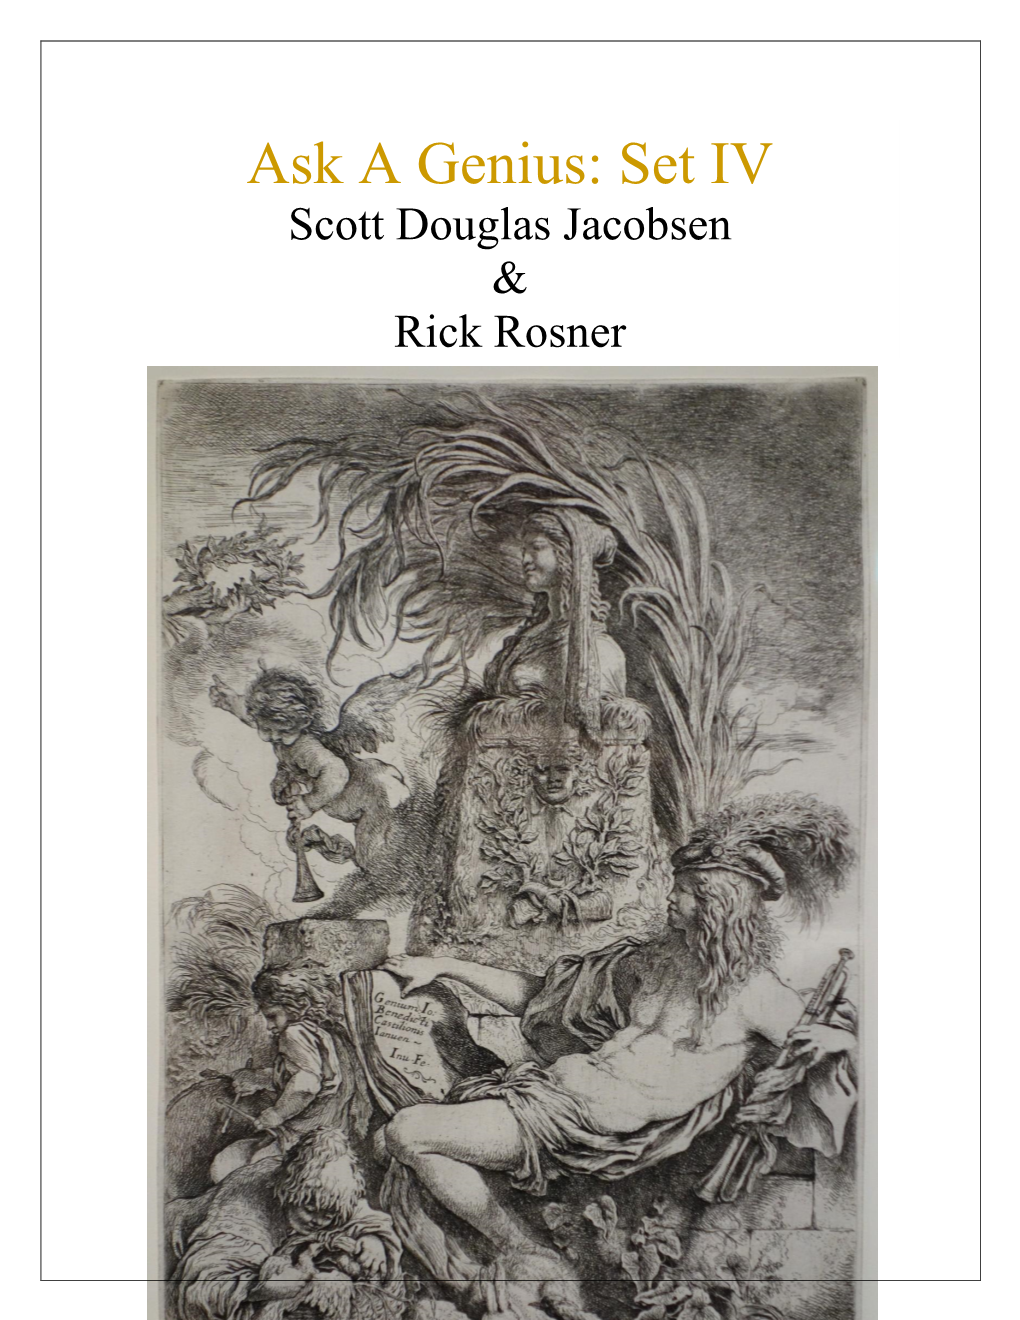 Ask a Genius: Set IV Scott Douglas Jacobsen & Rick Rosner